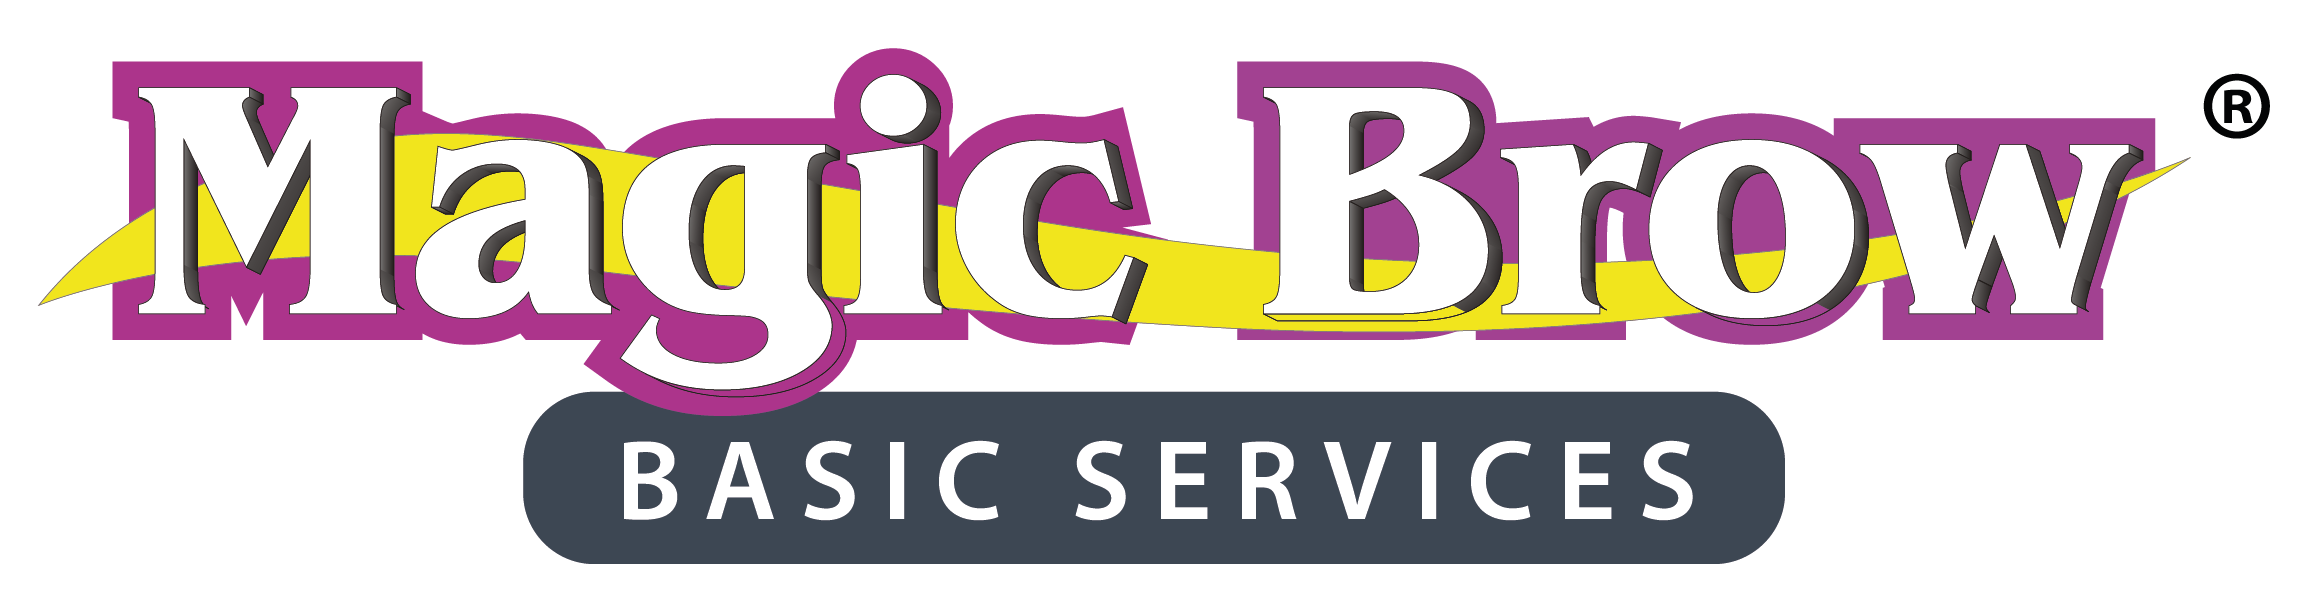 Magic Brow Logos_Basic Services